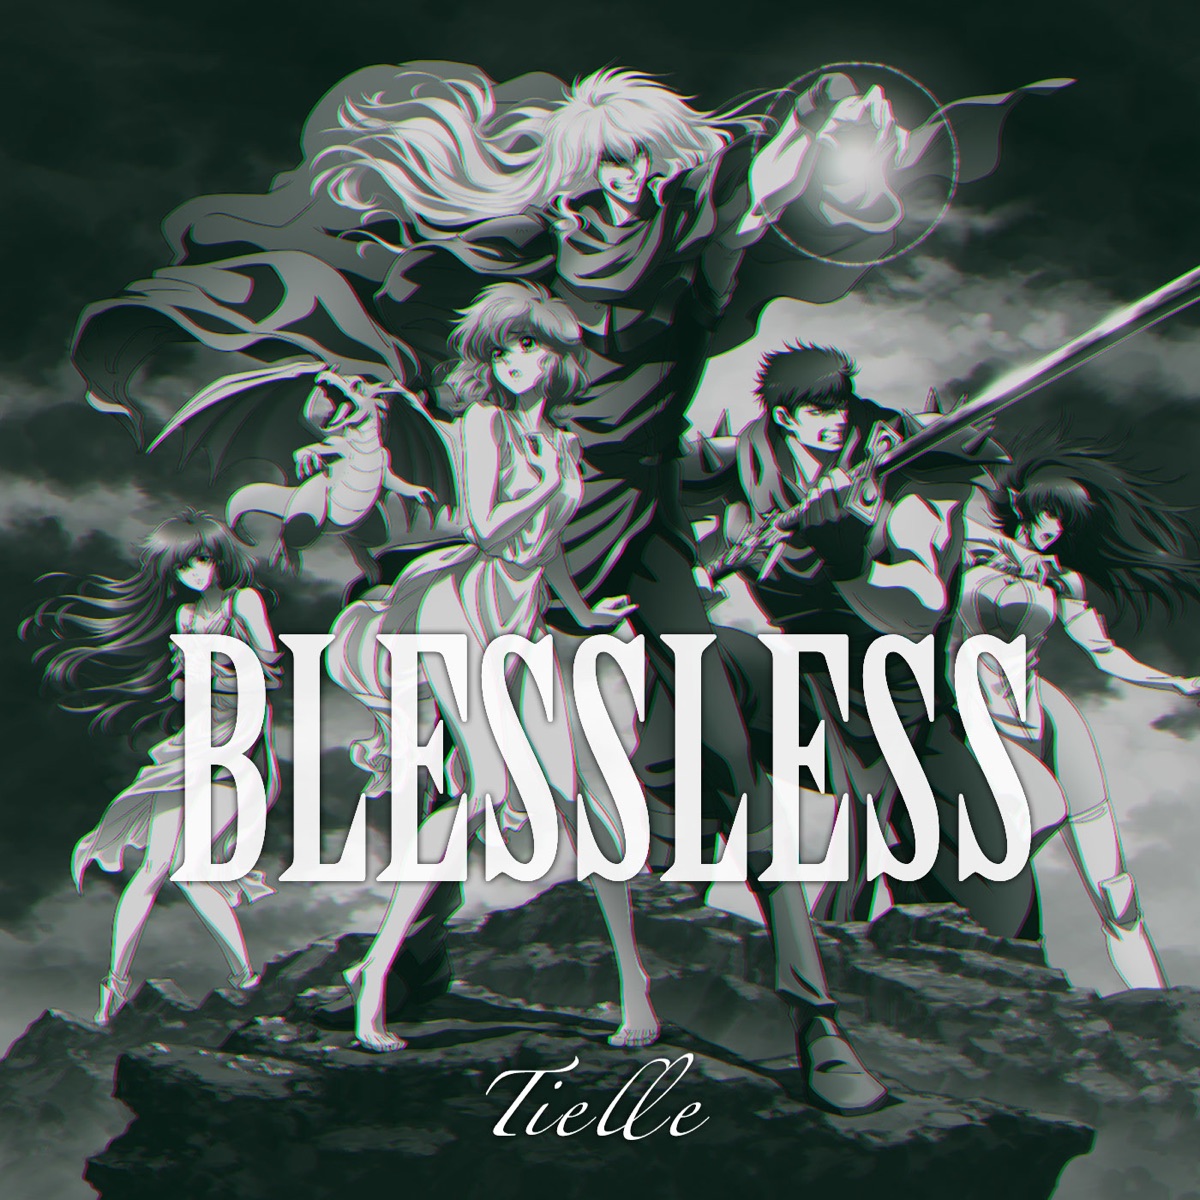 Cover art for『Tielle - BLESSLESS』from the release『BLESSLESS』